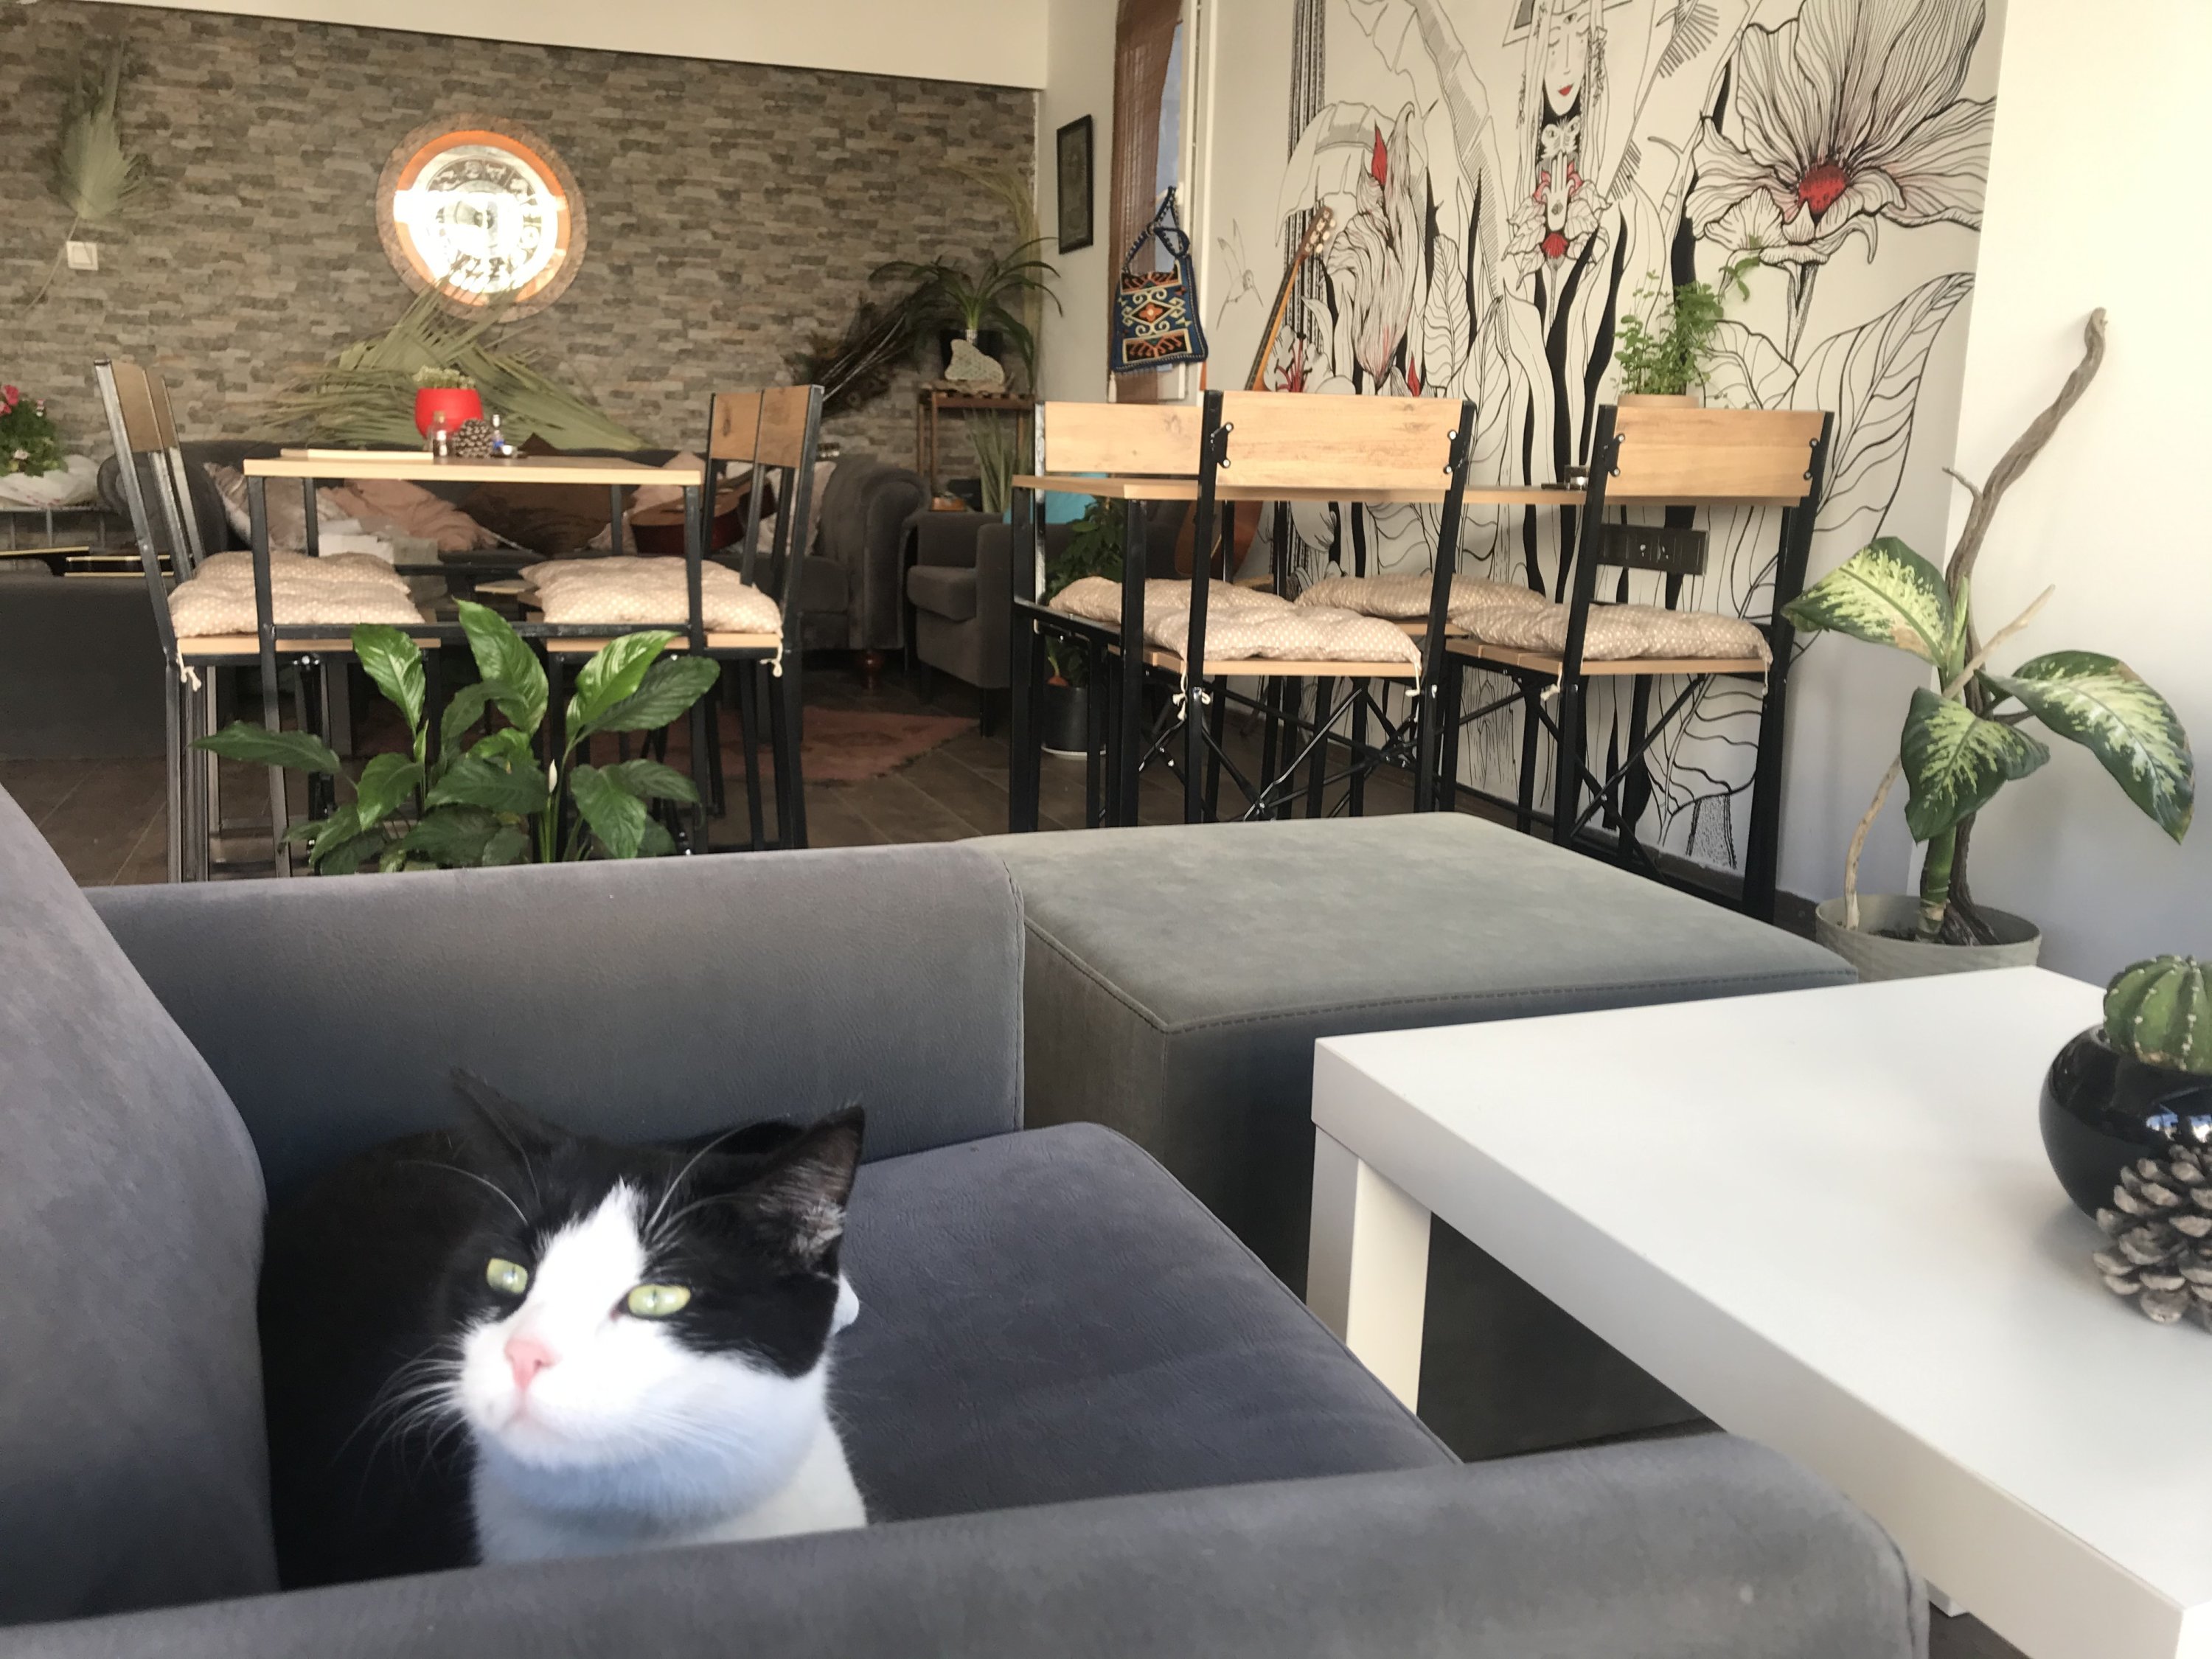 Dalia Vegan Mutfak is a recently opened vegan cafe located in close proximity to the Turgutreis Marina, Bodrum, Turkey. (Didem Önder for Daily Sabah)